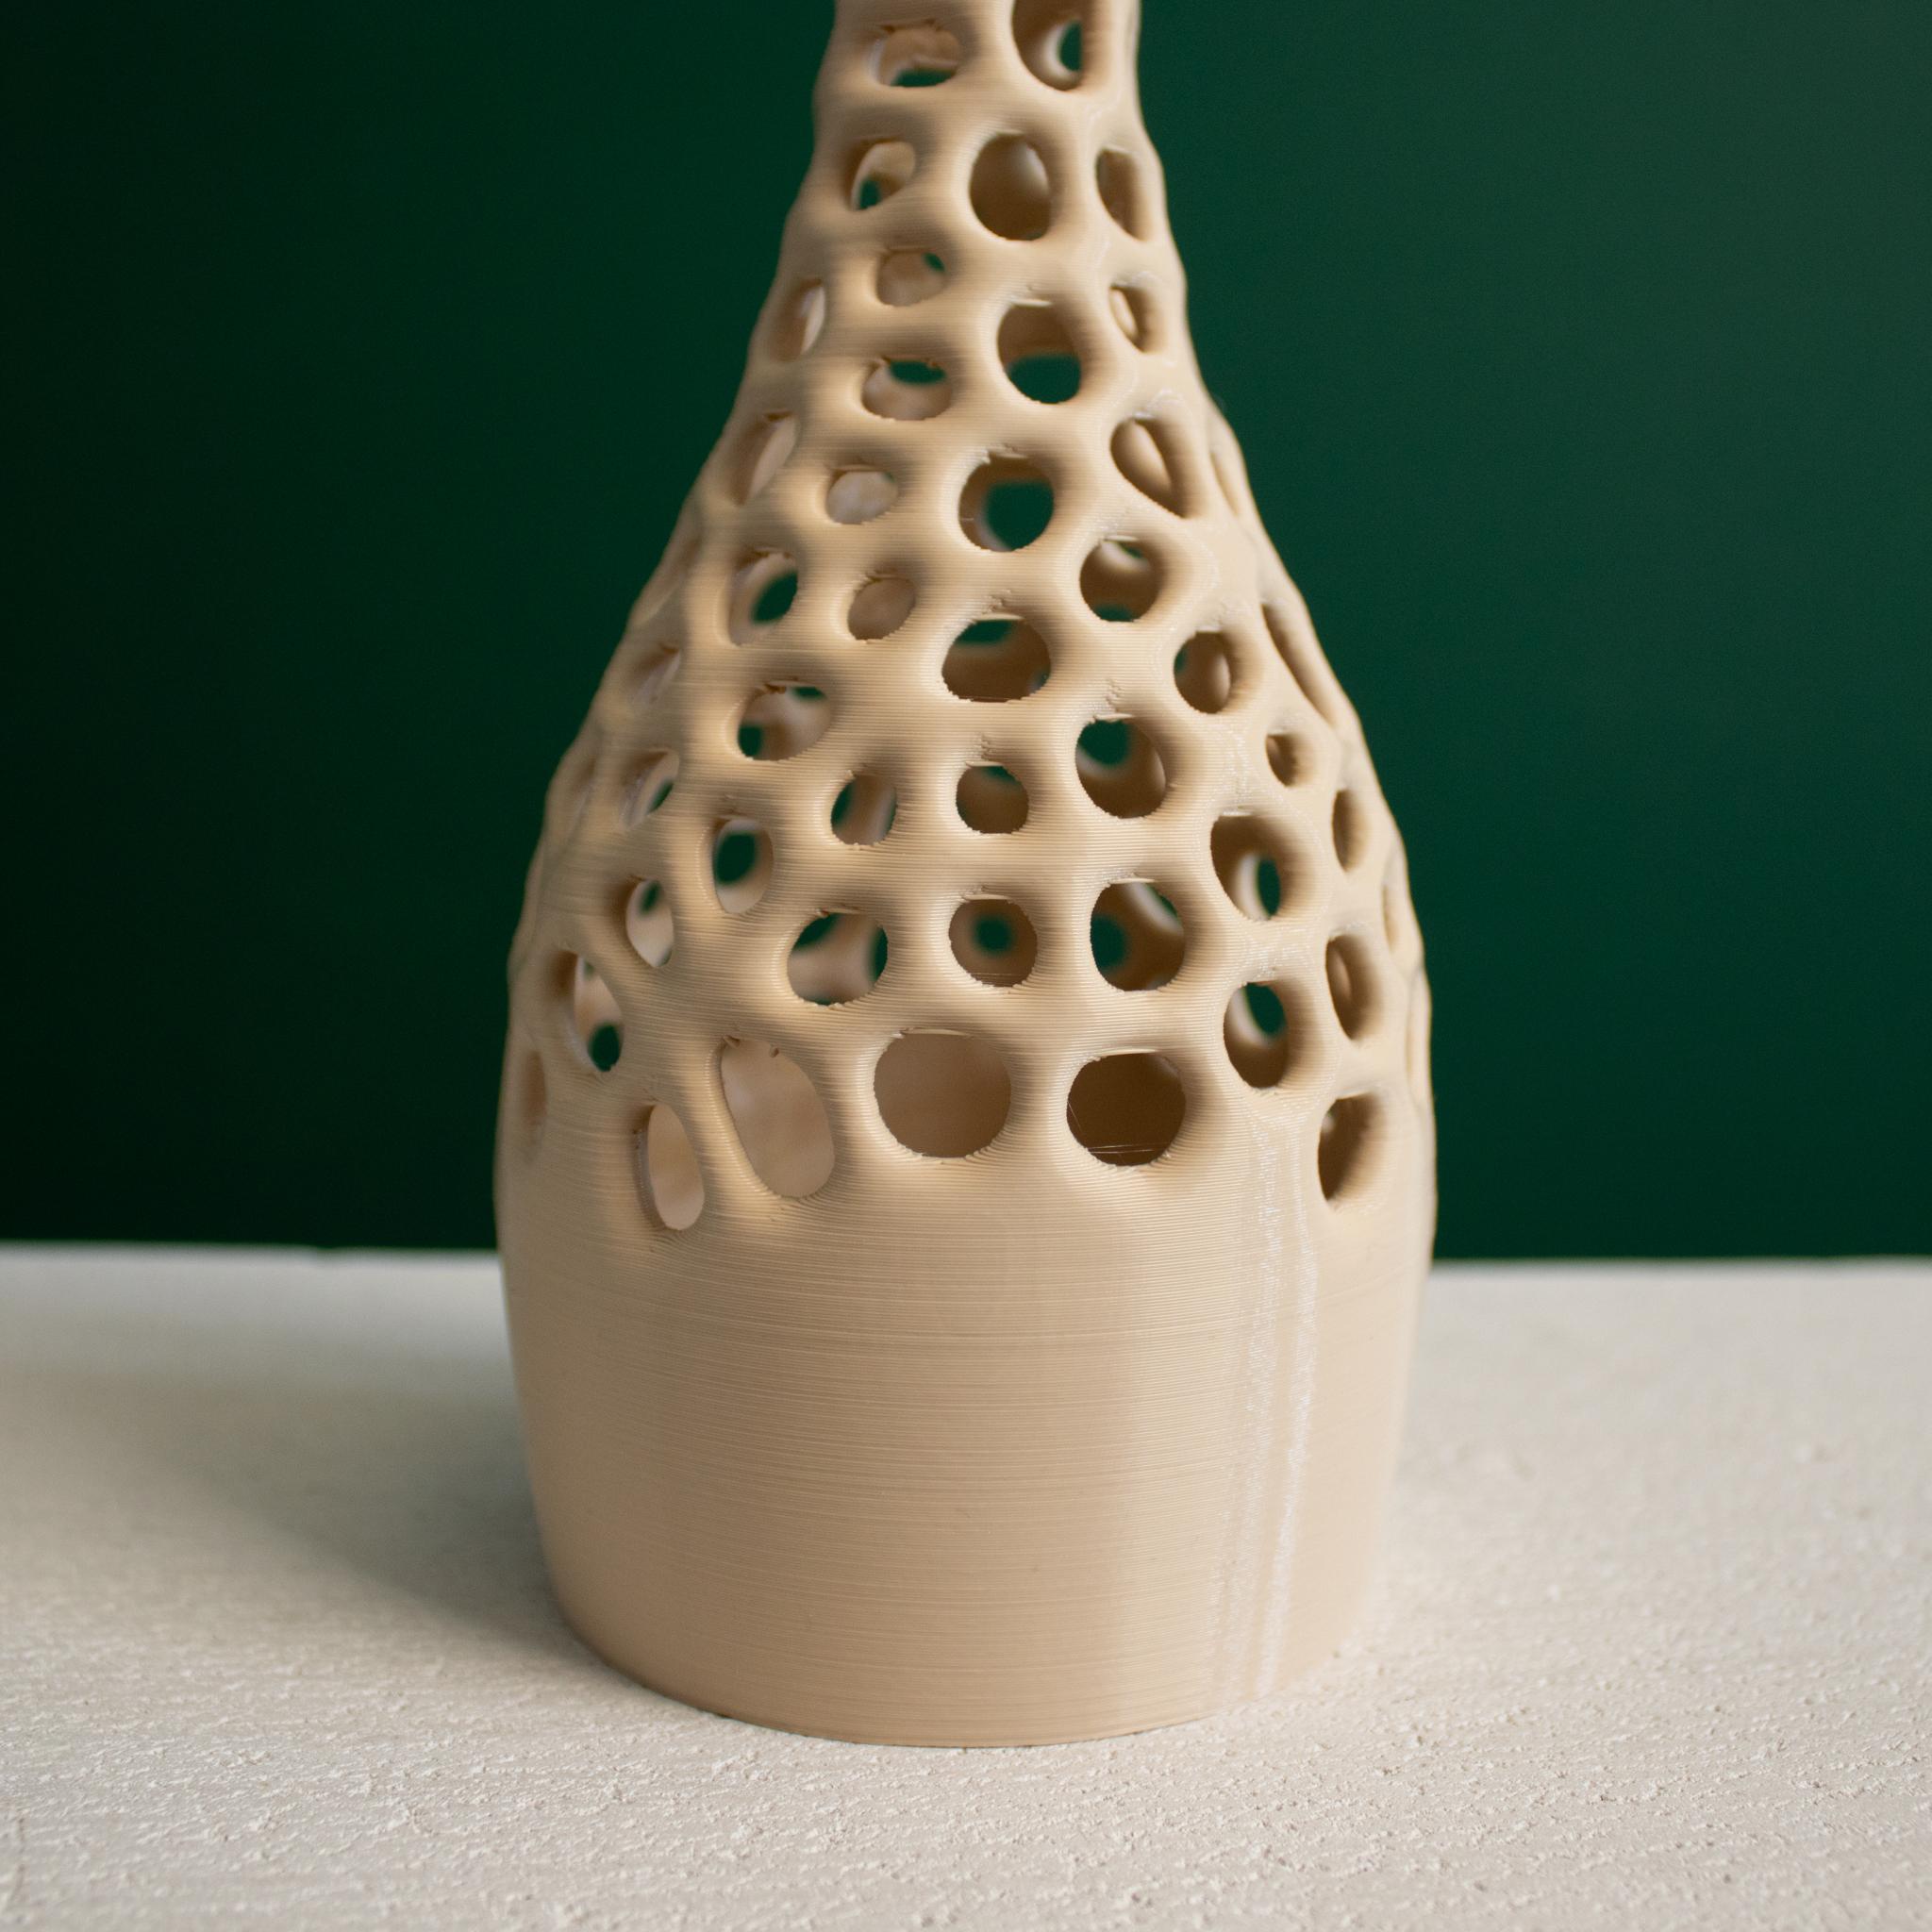  Voronoi Decoration Vase | Slimprint  3d model